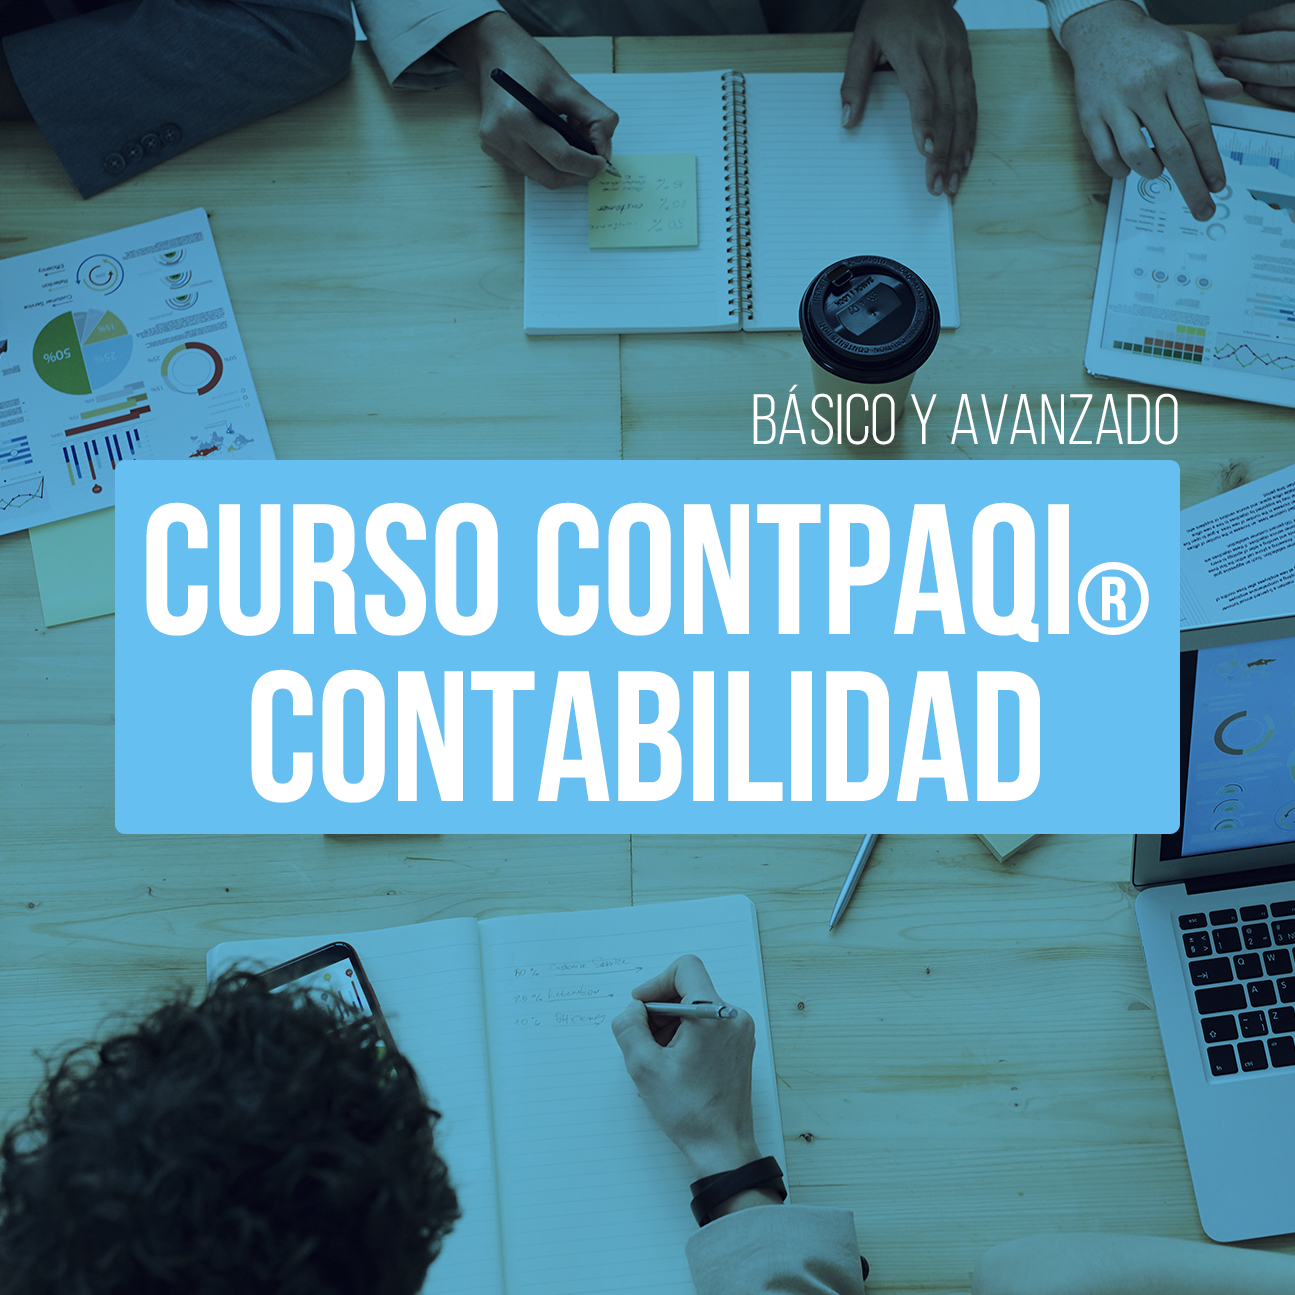 CURSO CONTPAQi® Contabilidad